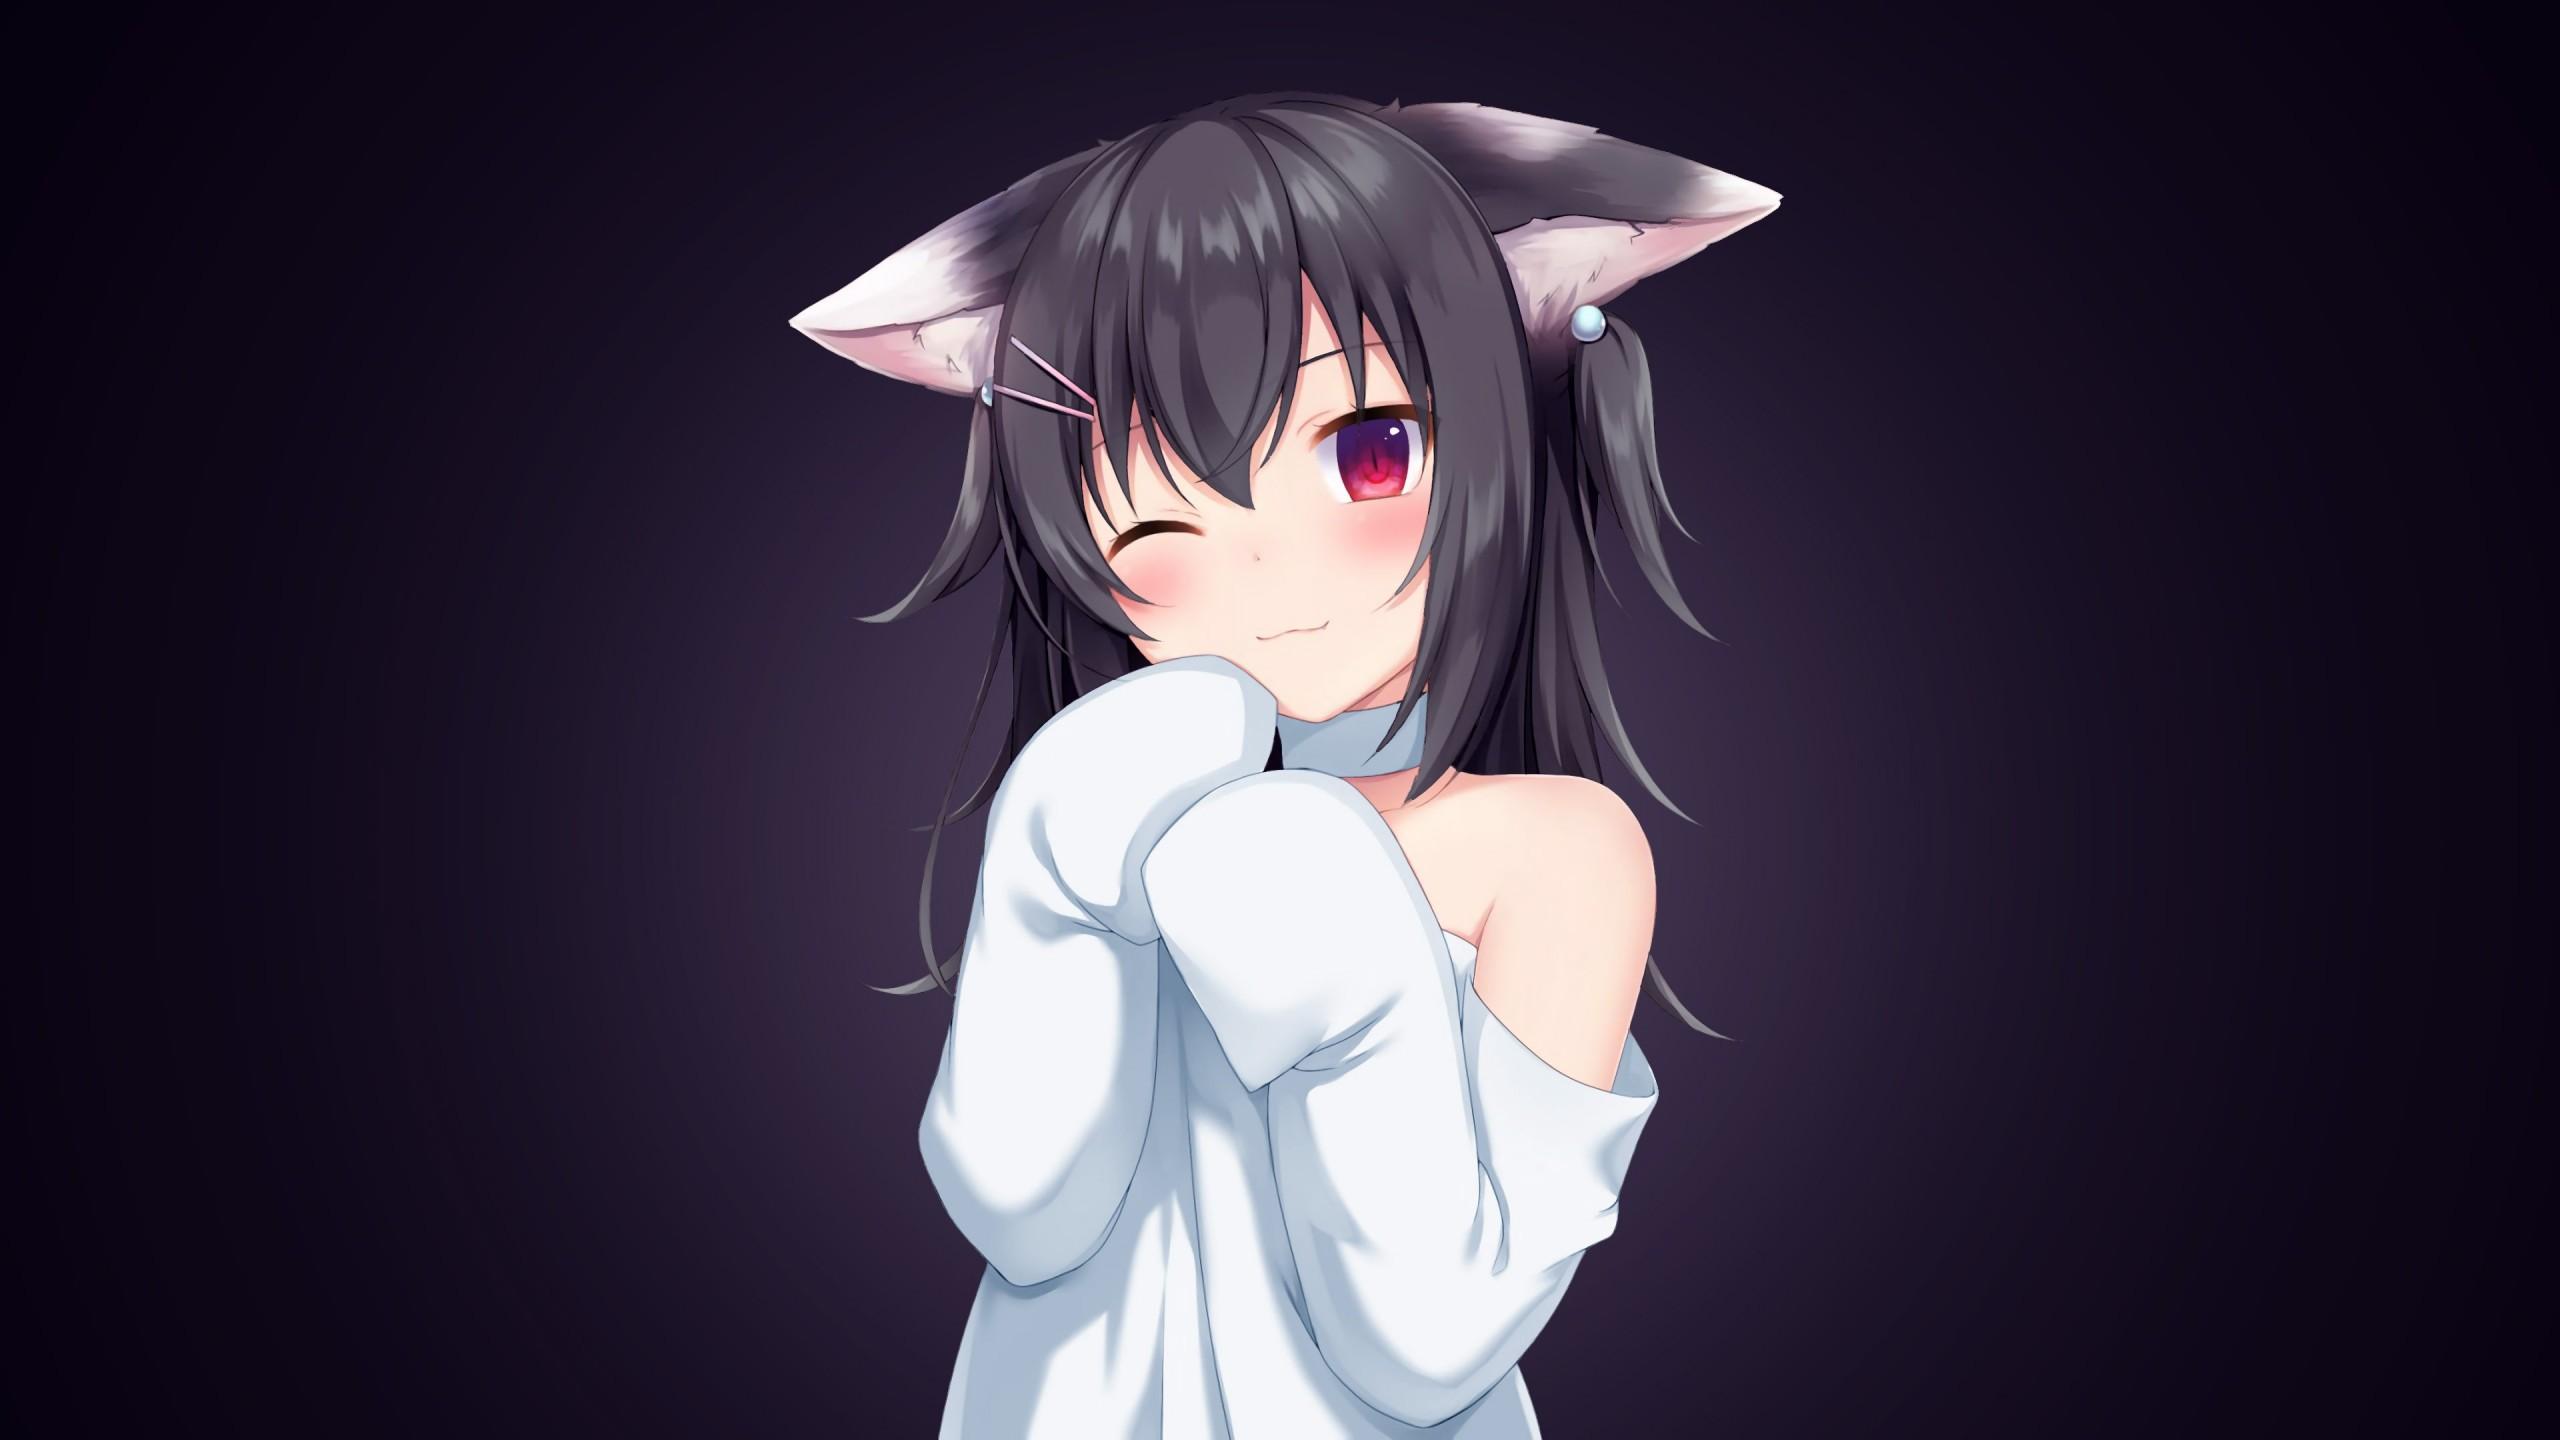 Wallpaper Black Cat, Anime girl, 4K, Anime / Most Popular,. Wallpaper for iPhone, Android, Mobile and Desktop